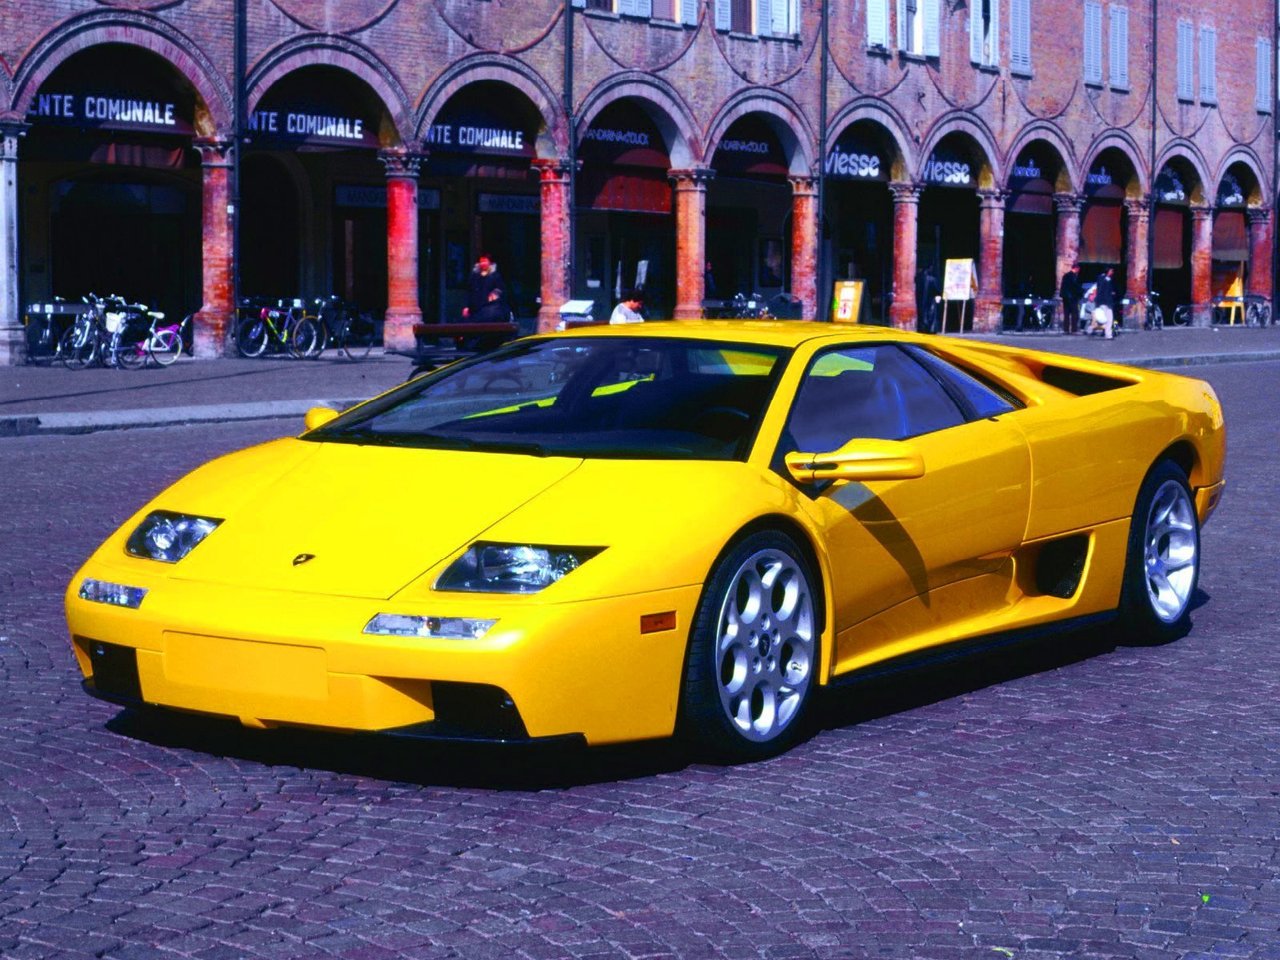 Расход газа двух комплектаций купе Lamborghini Diablo. Разница стоимости заправки газом и бензином. Автономный пробег до и после установки ГБО.